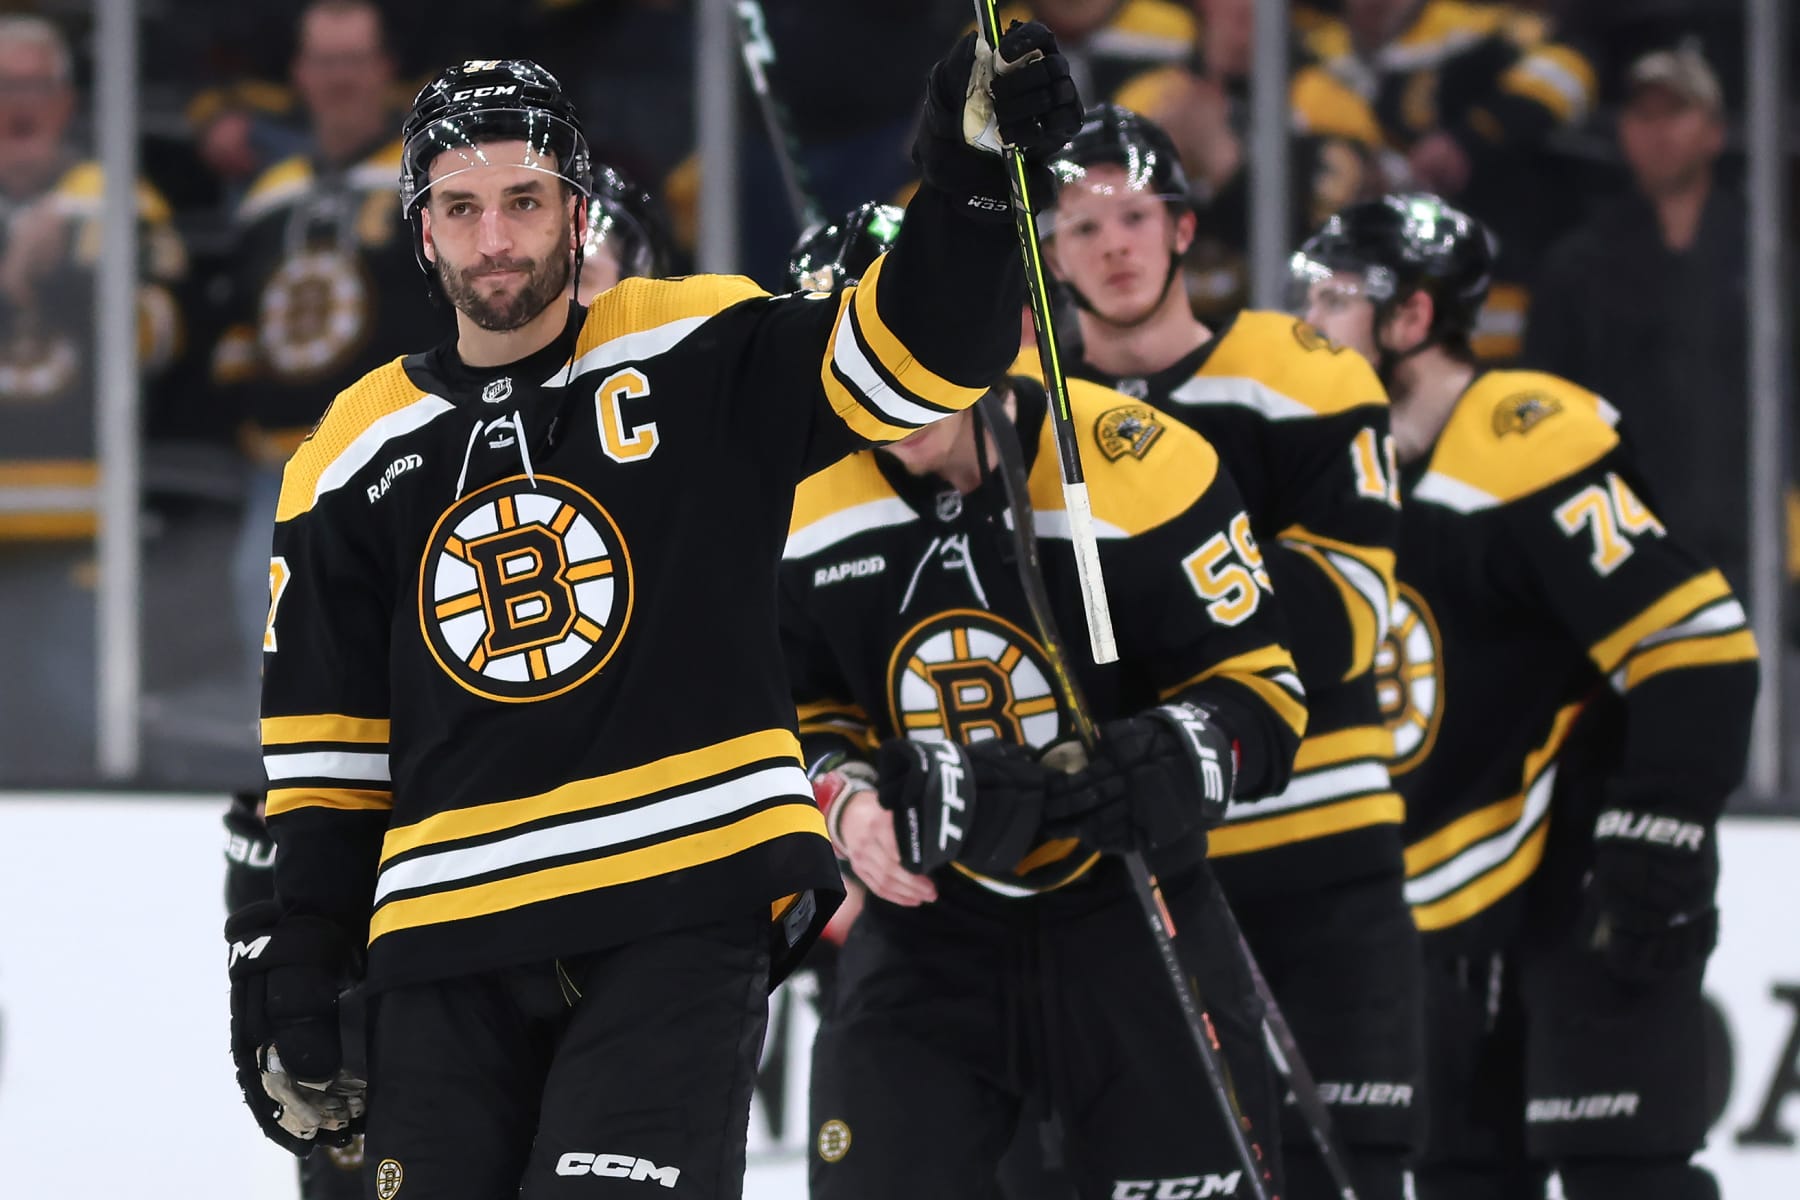 Bruins' David Krejci Expects To Make Decision On NHL Future 'Soon